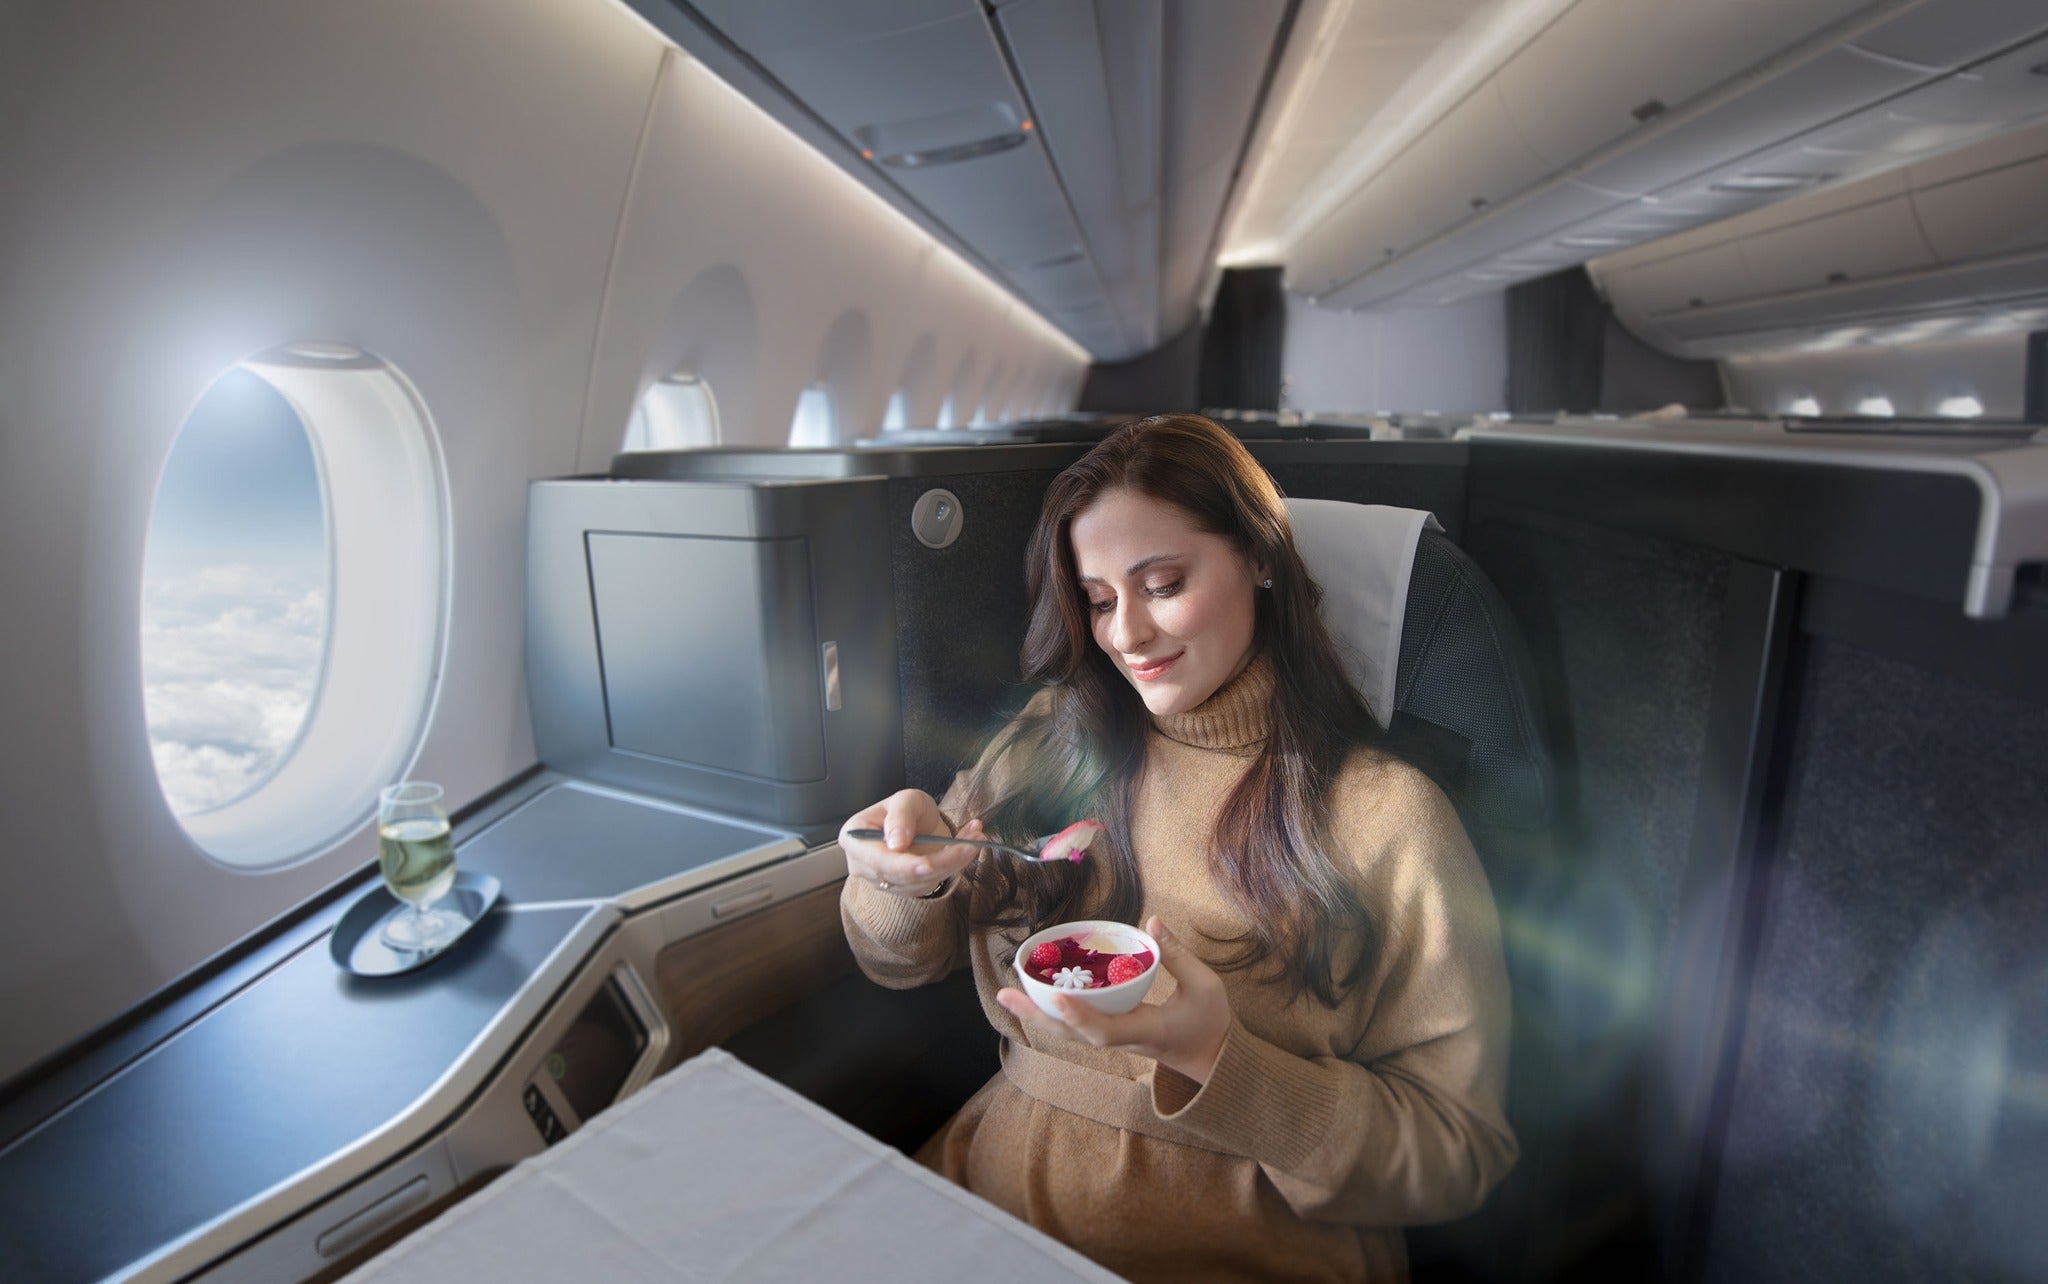 British Airways Club Suite woman eating dessert